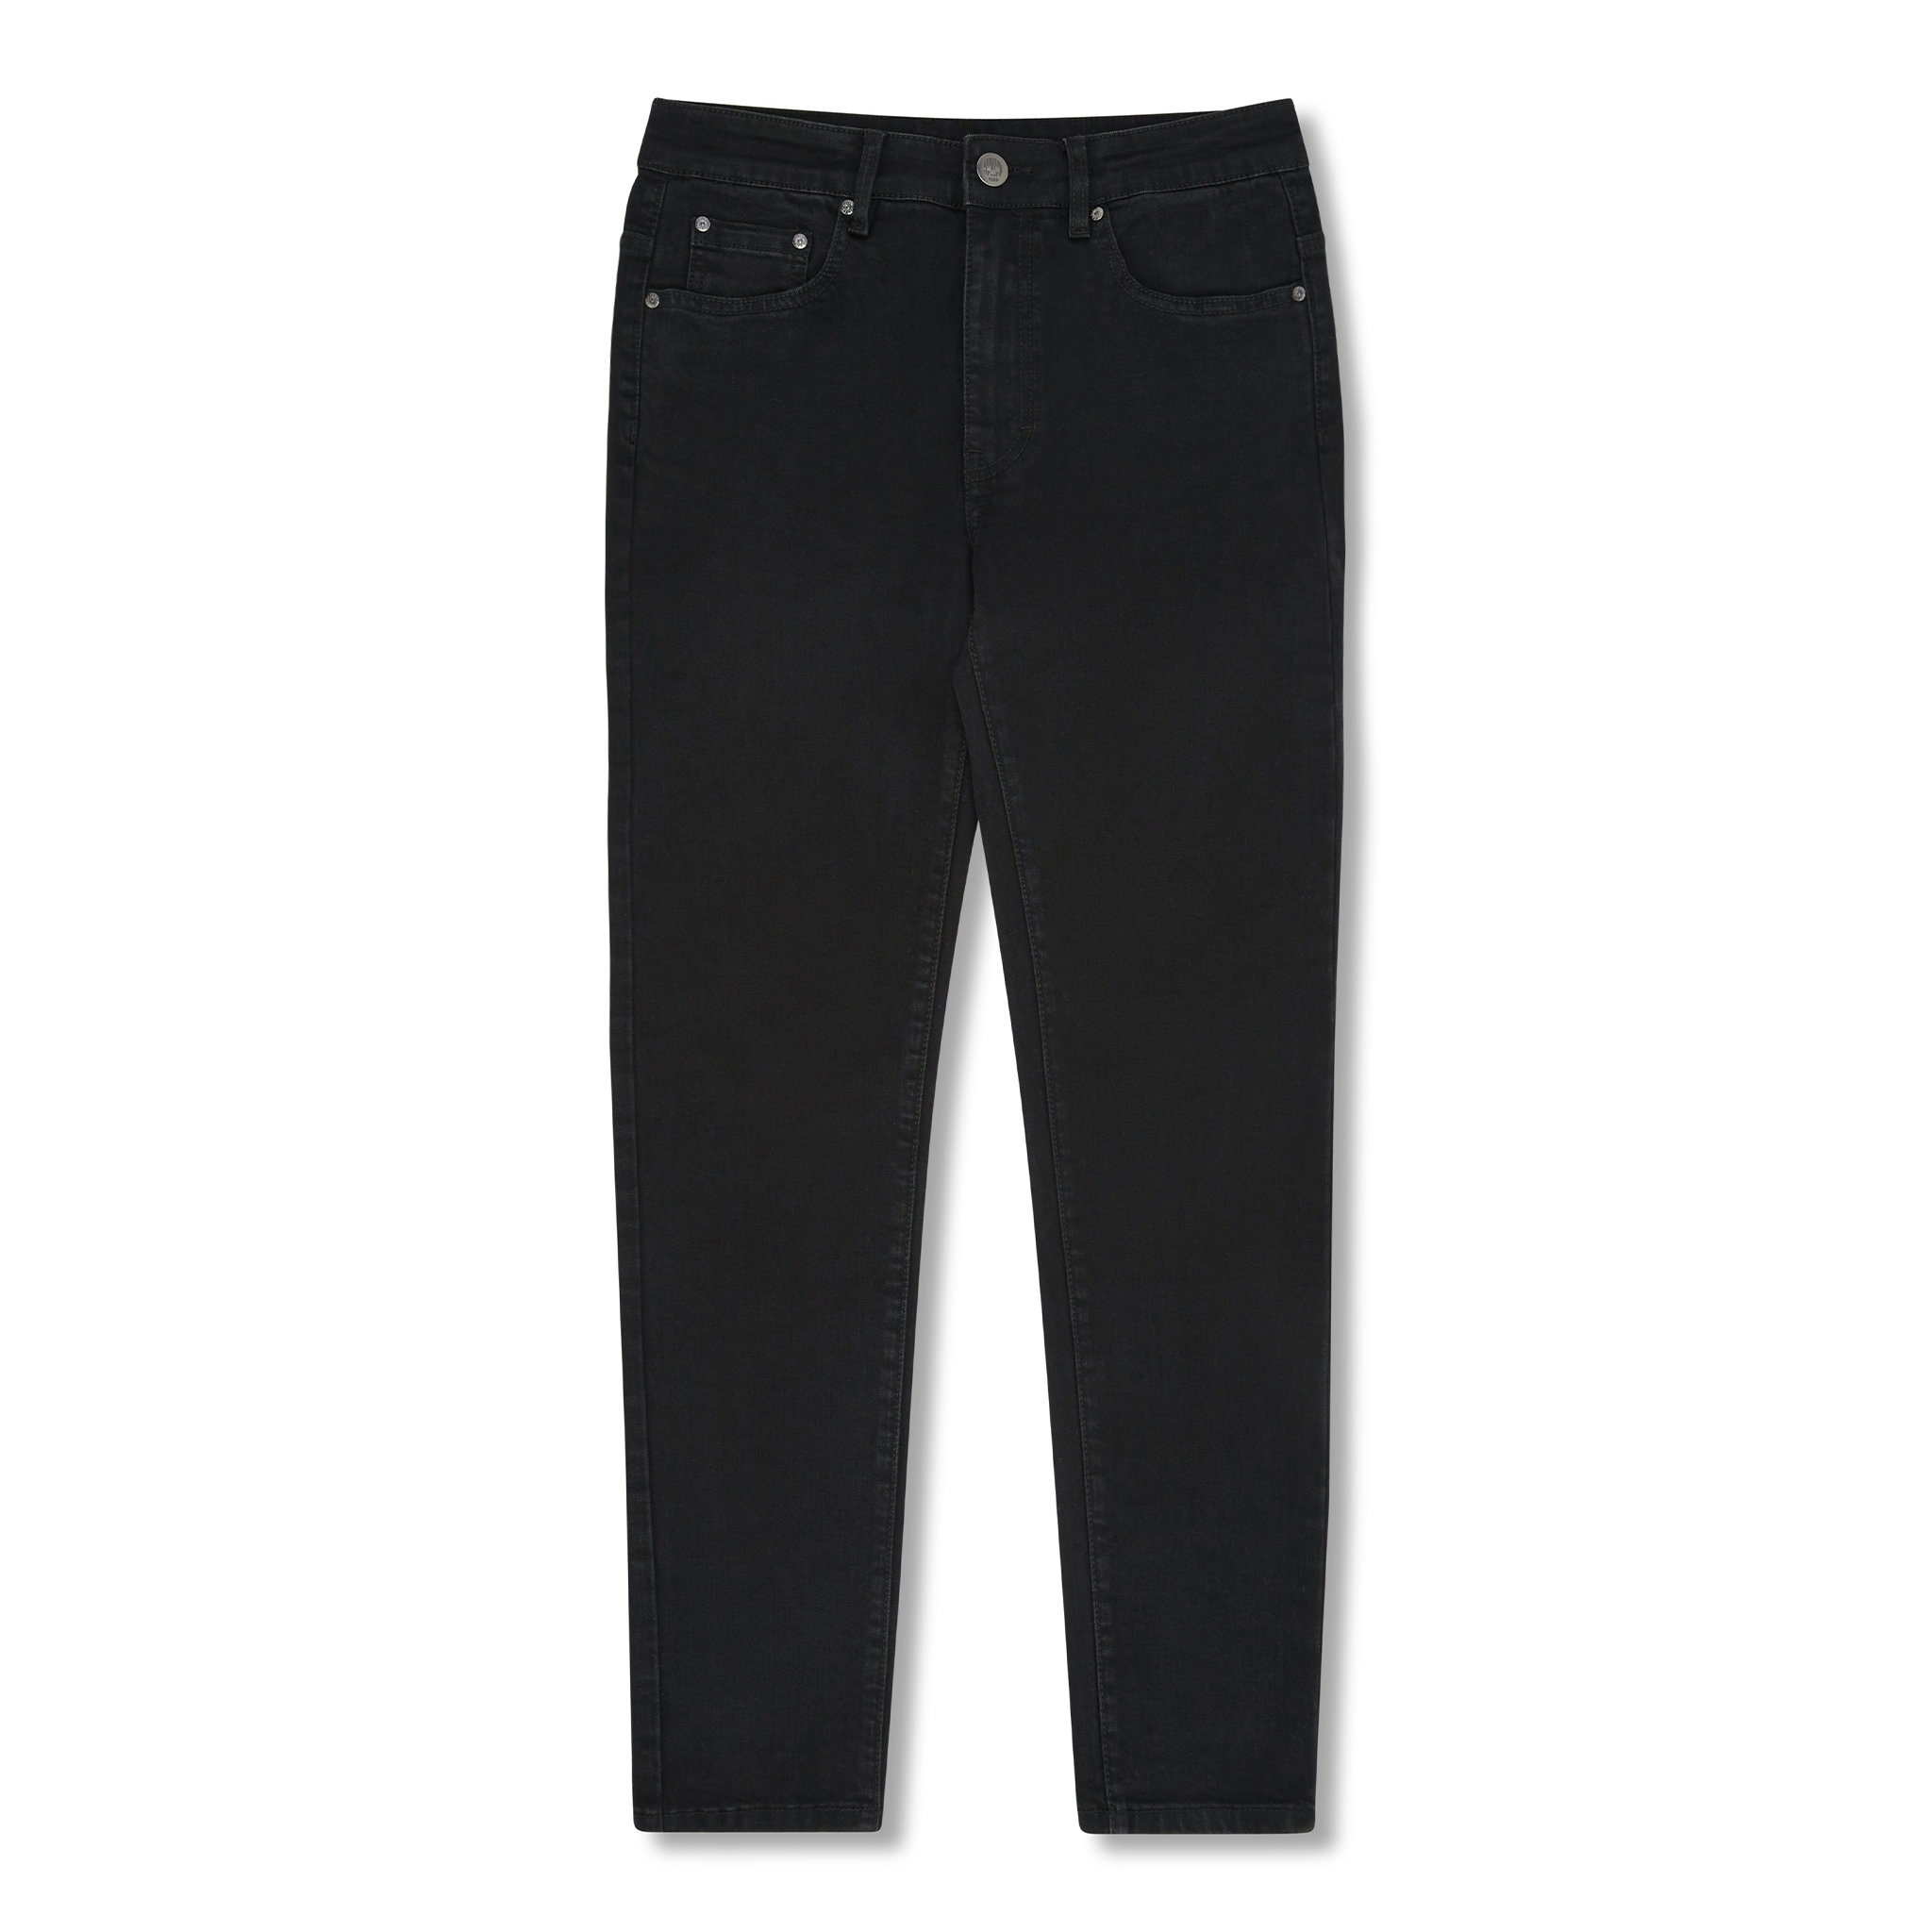 Slim-fit faded black jeans